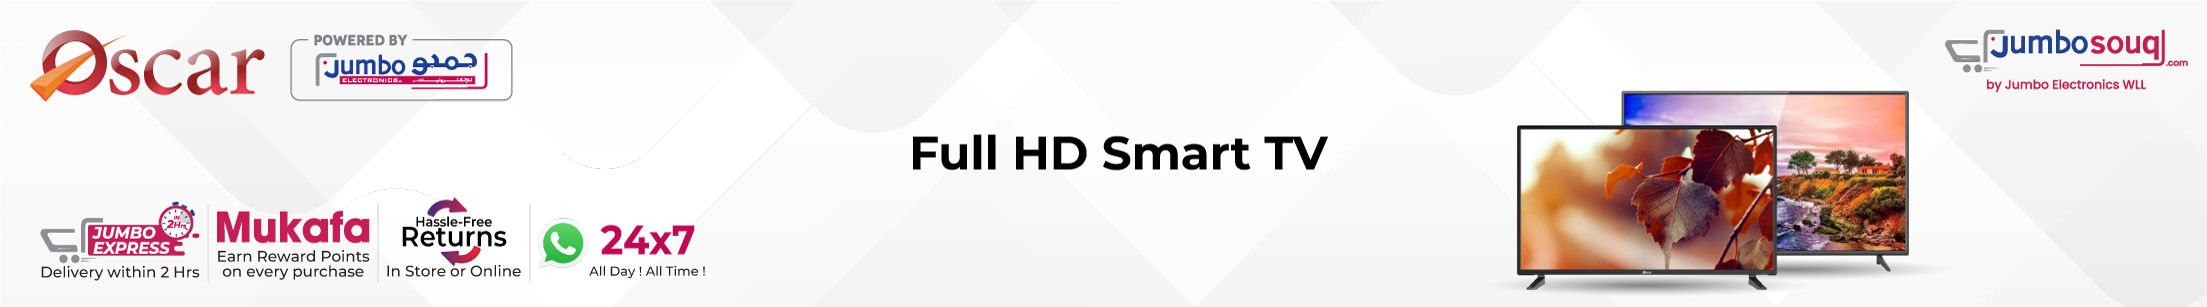 Full HD Smart TV